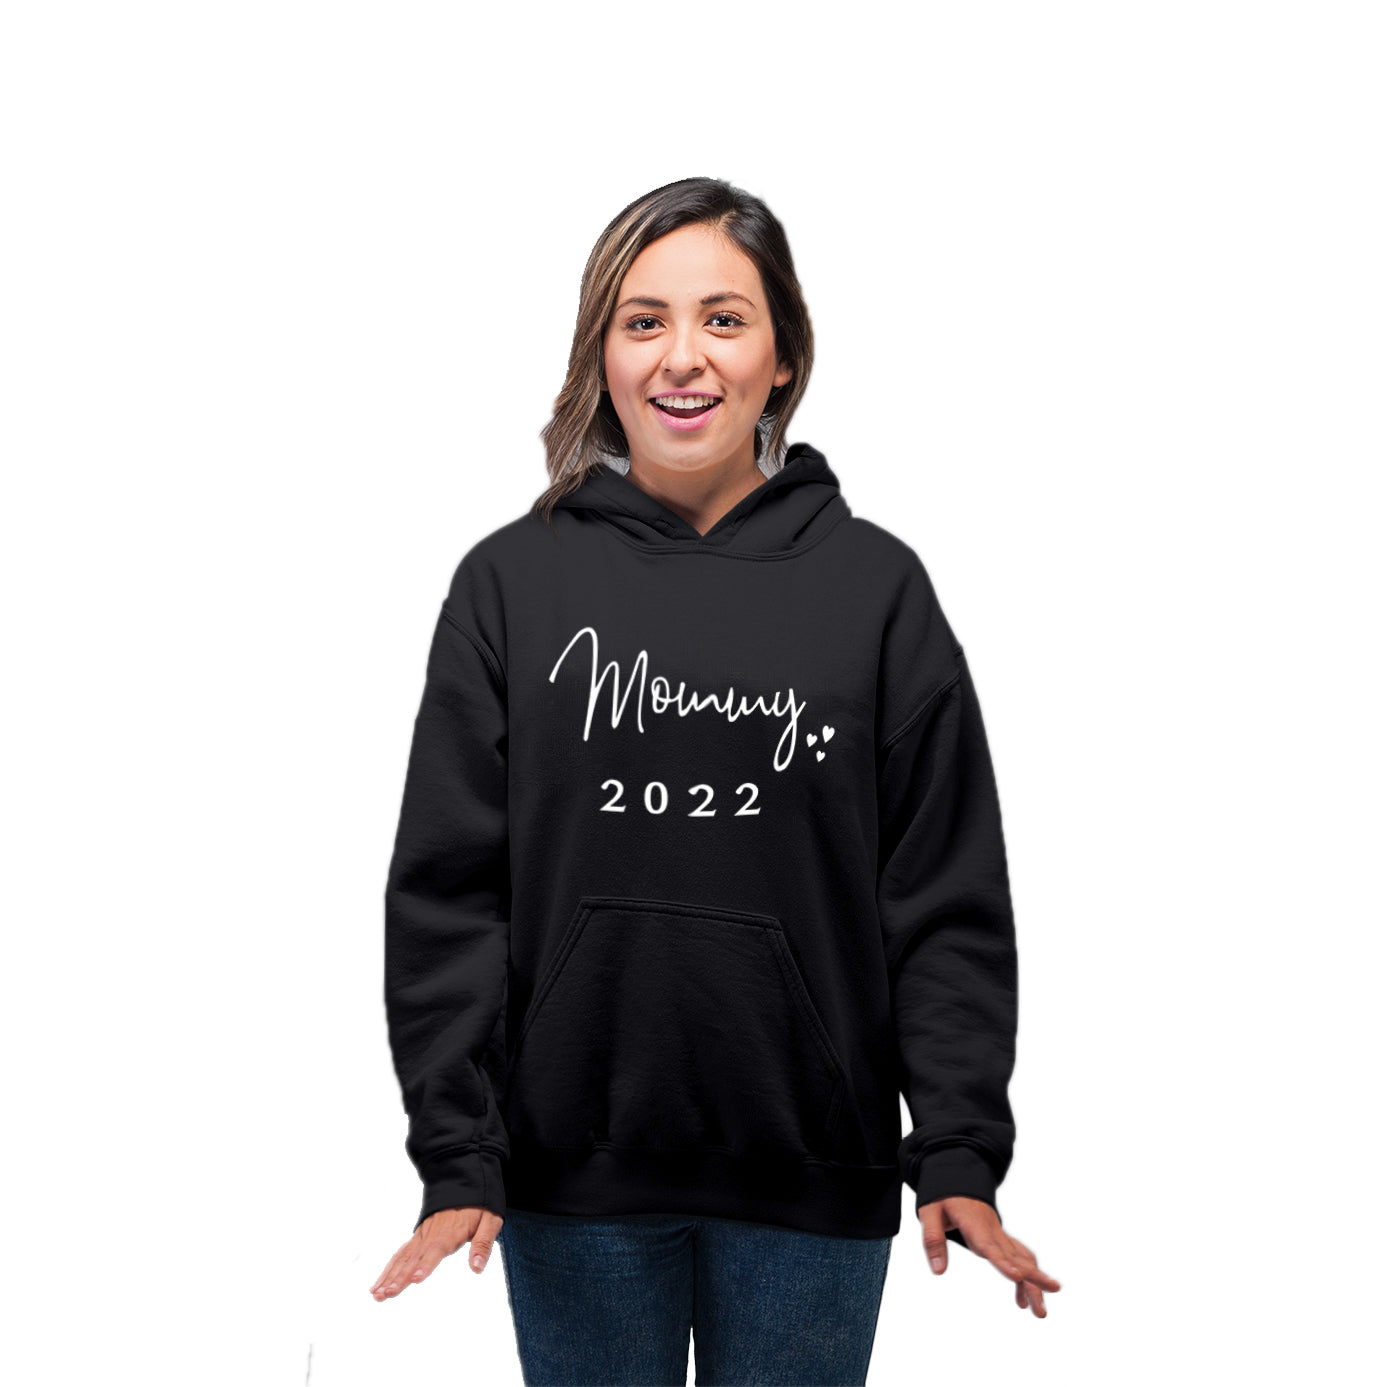 Mommy 2022 Daddy 2022 Matching Maternity Sweatshirts | Couple Maternity Hoodies- Black